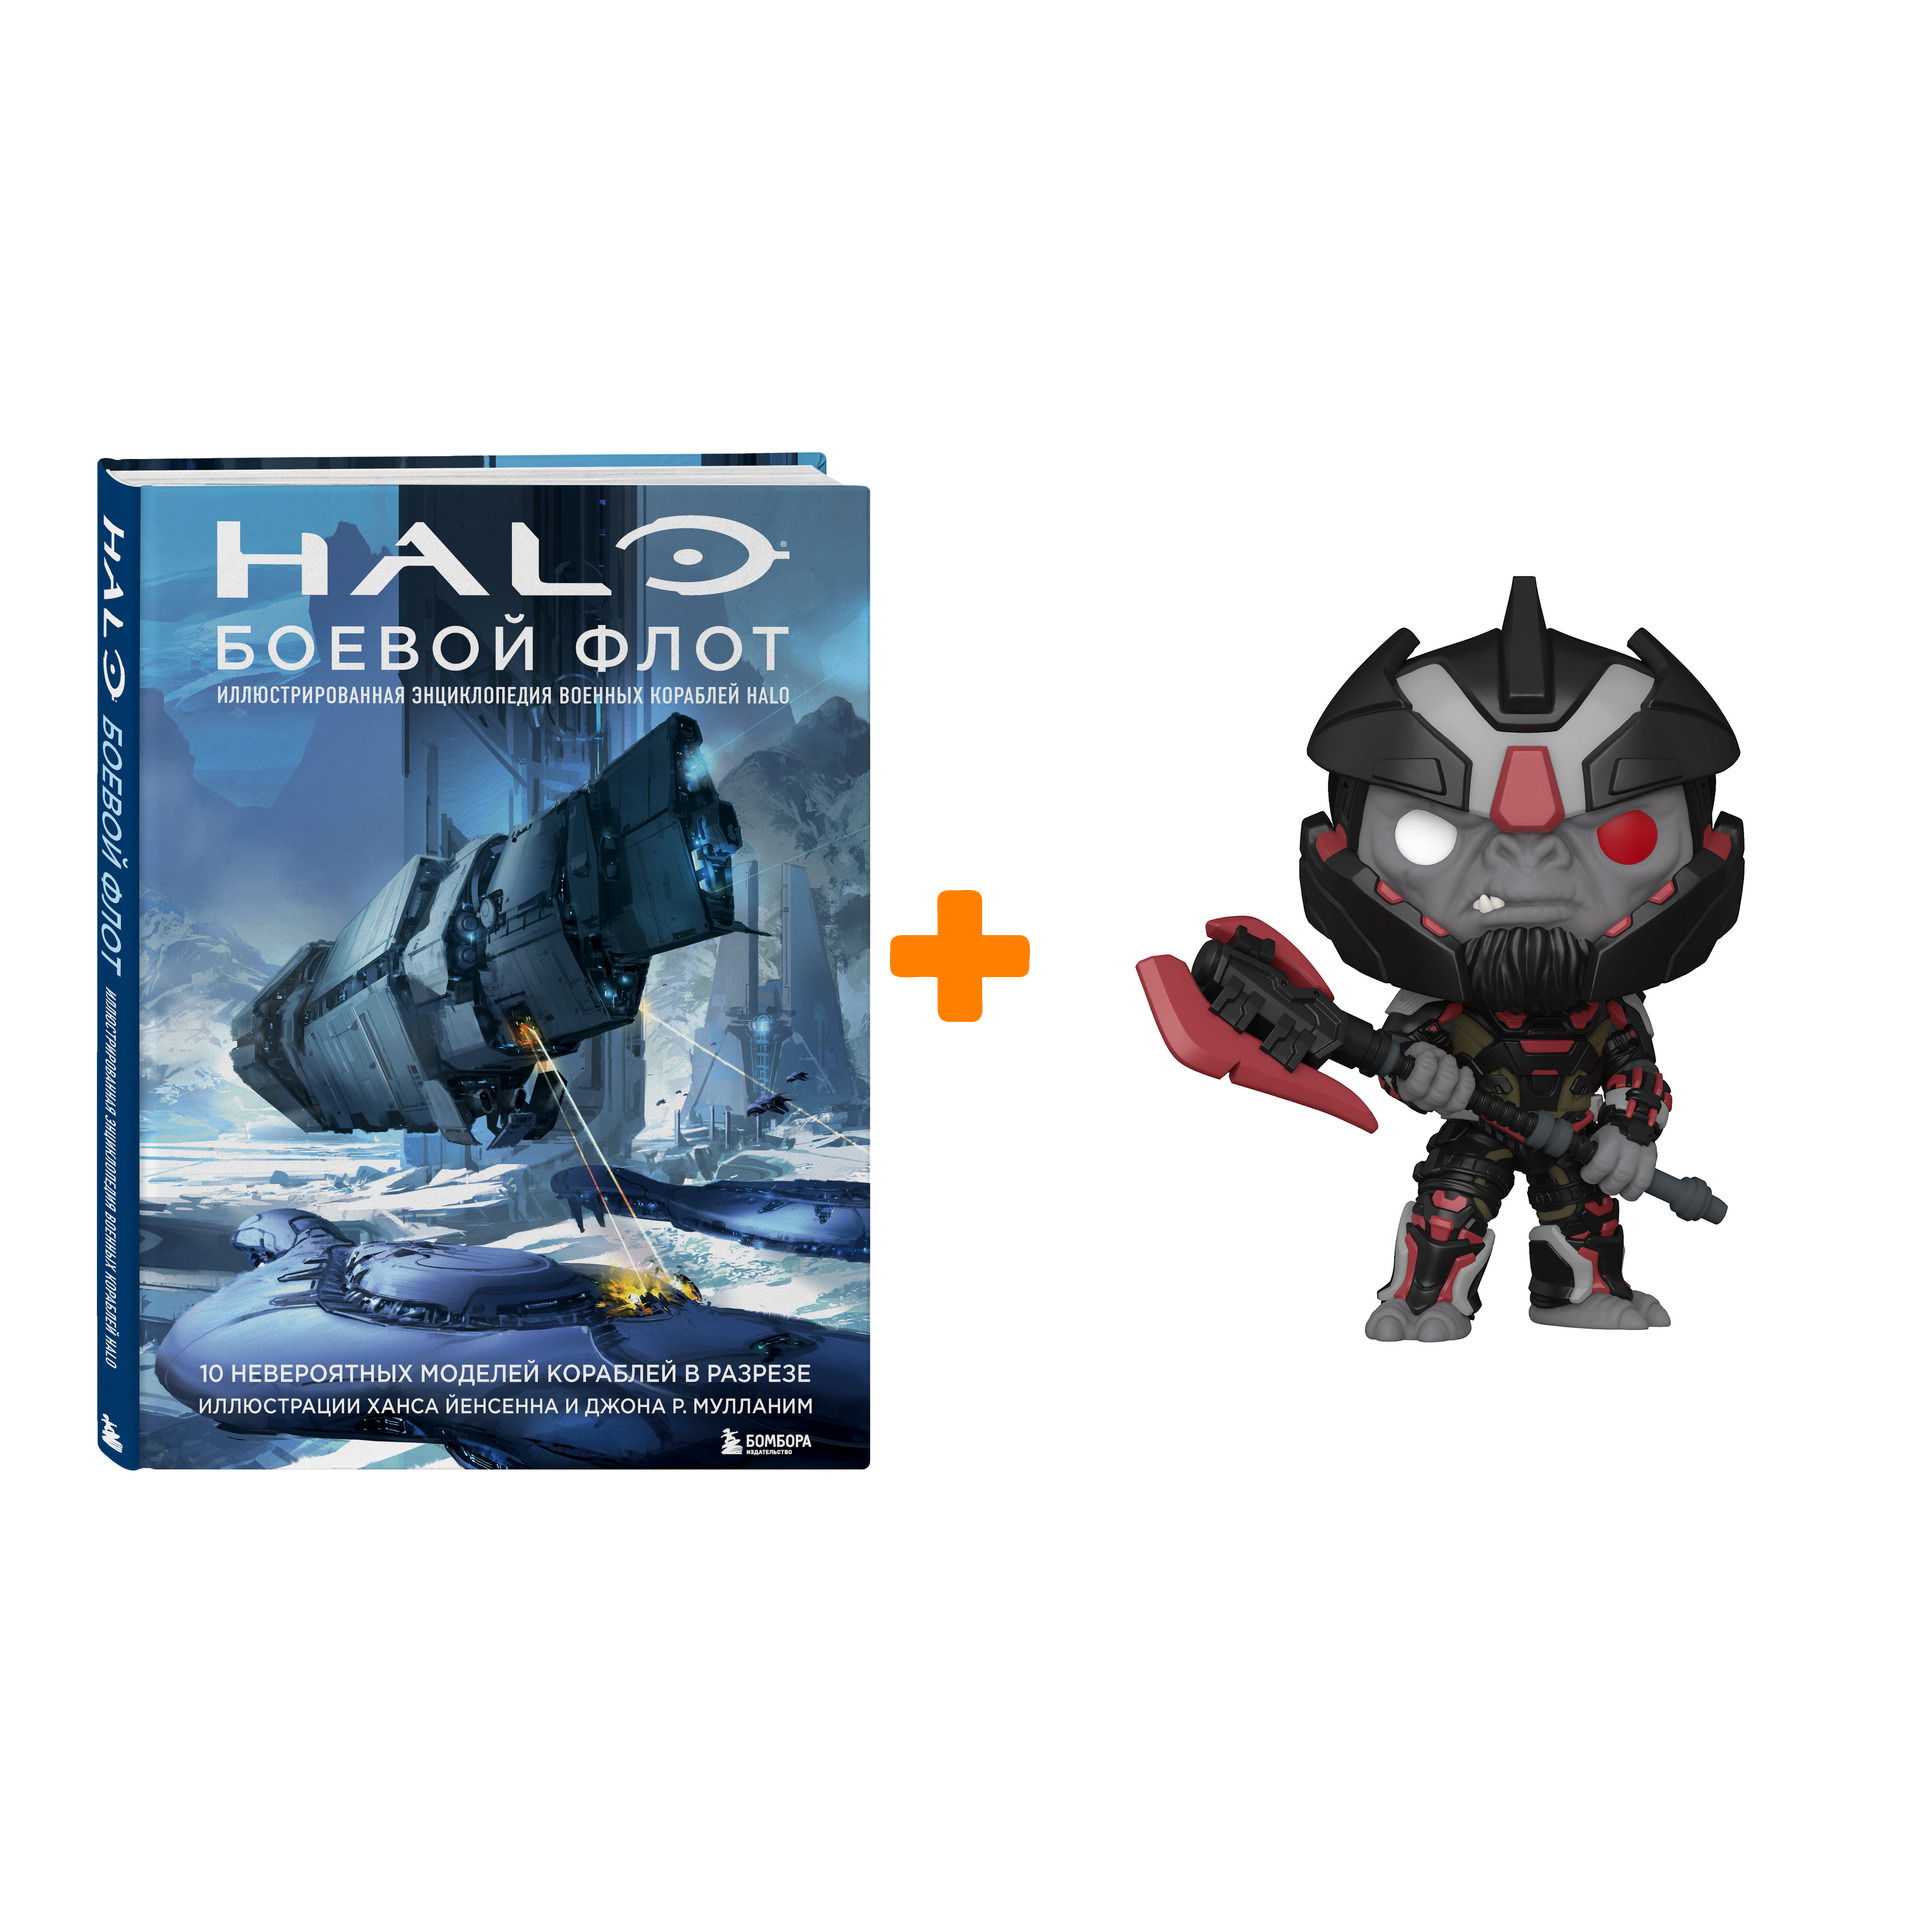 Комплект Halo: книга Halo: Боевой флот + фигурка Funko Эшарум из Halo Infinite (15 см) цена и фото